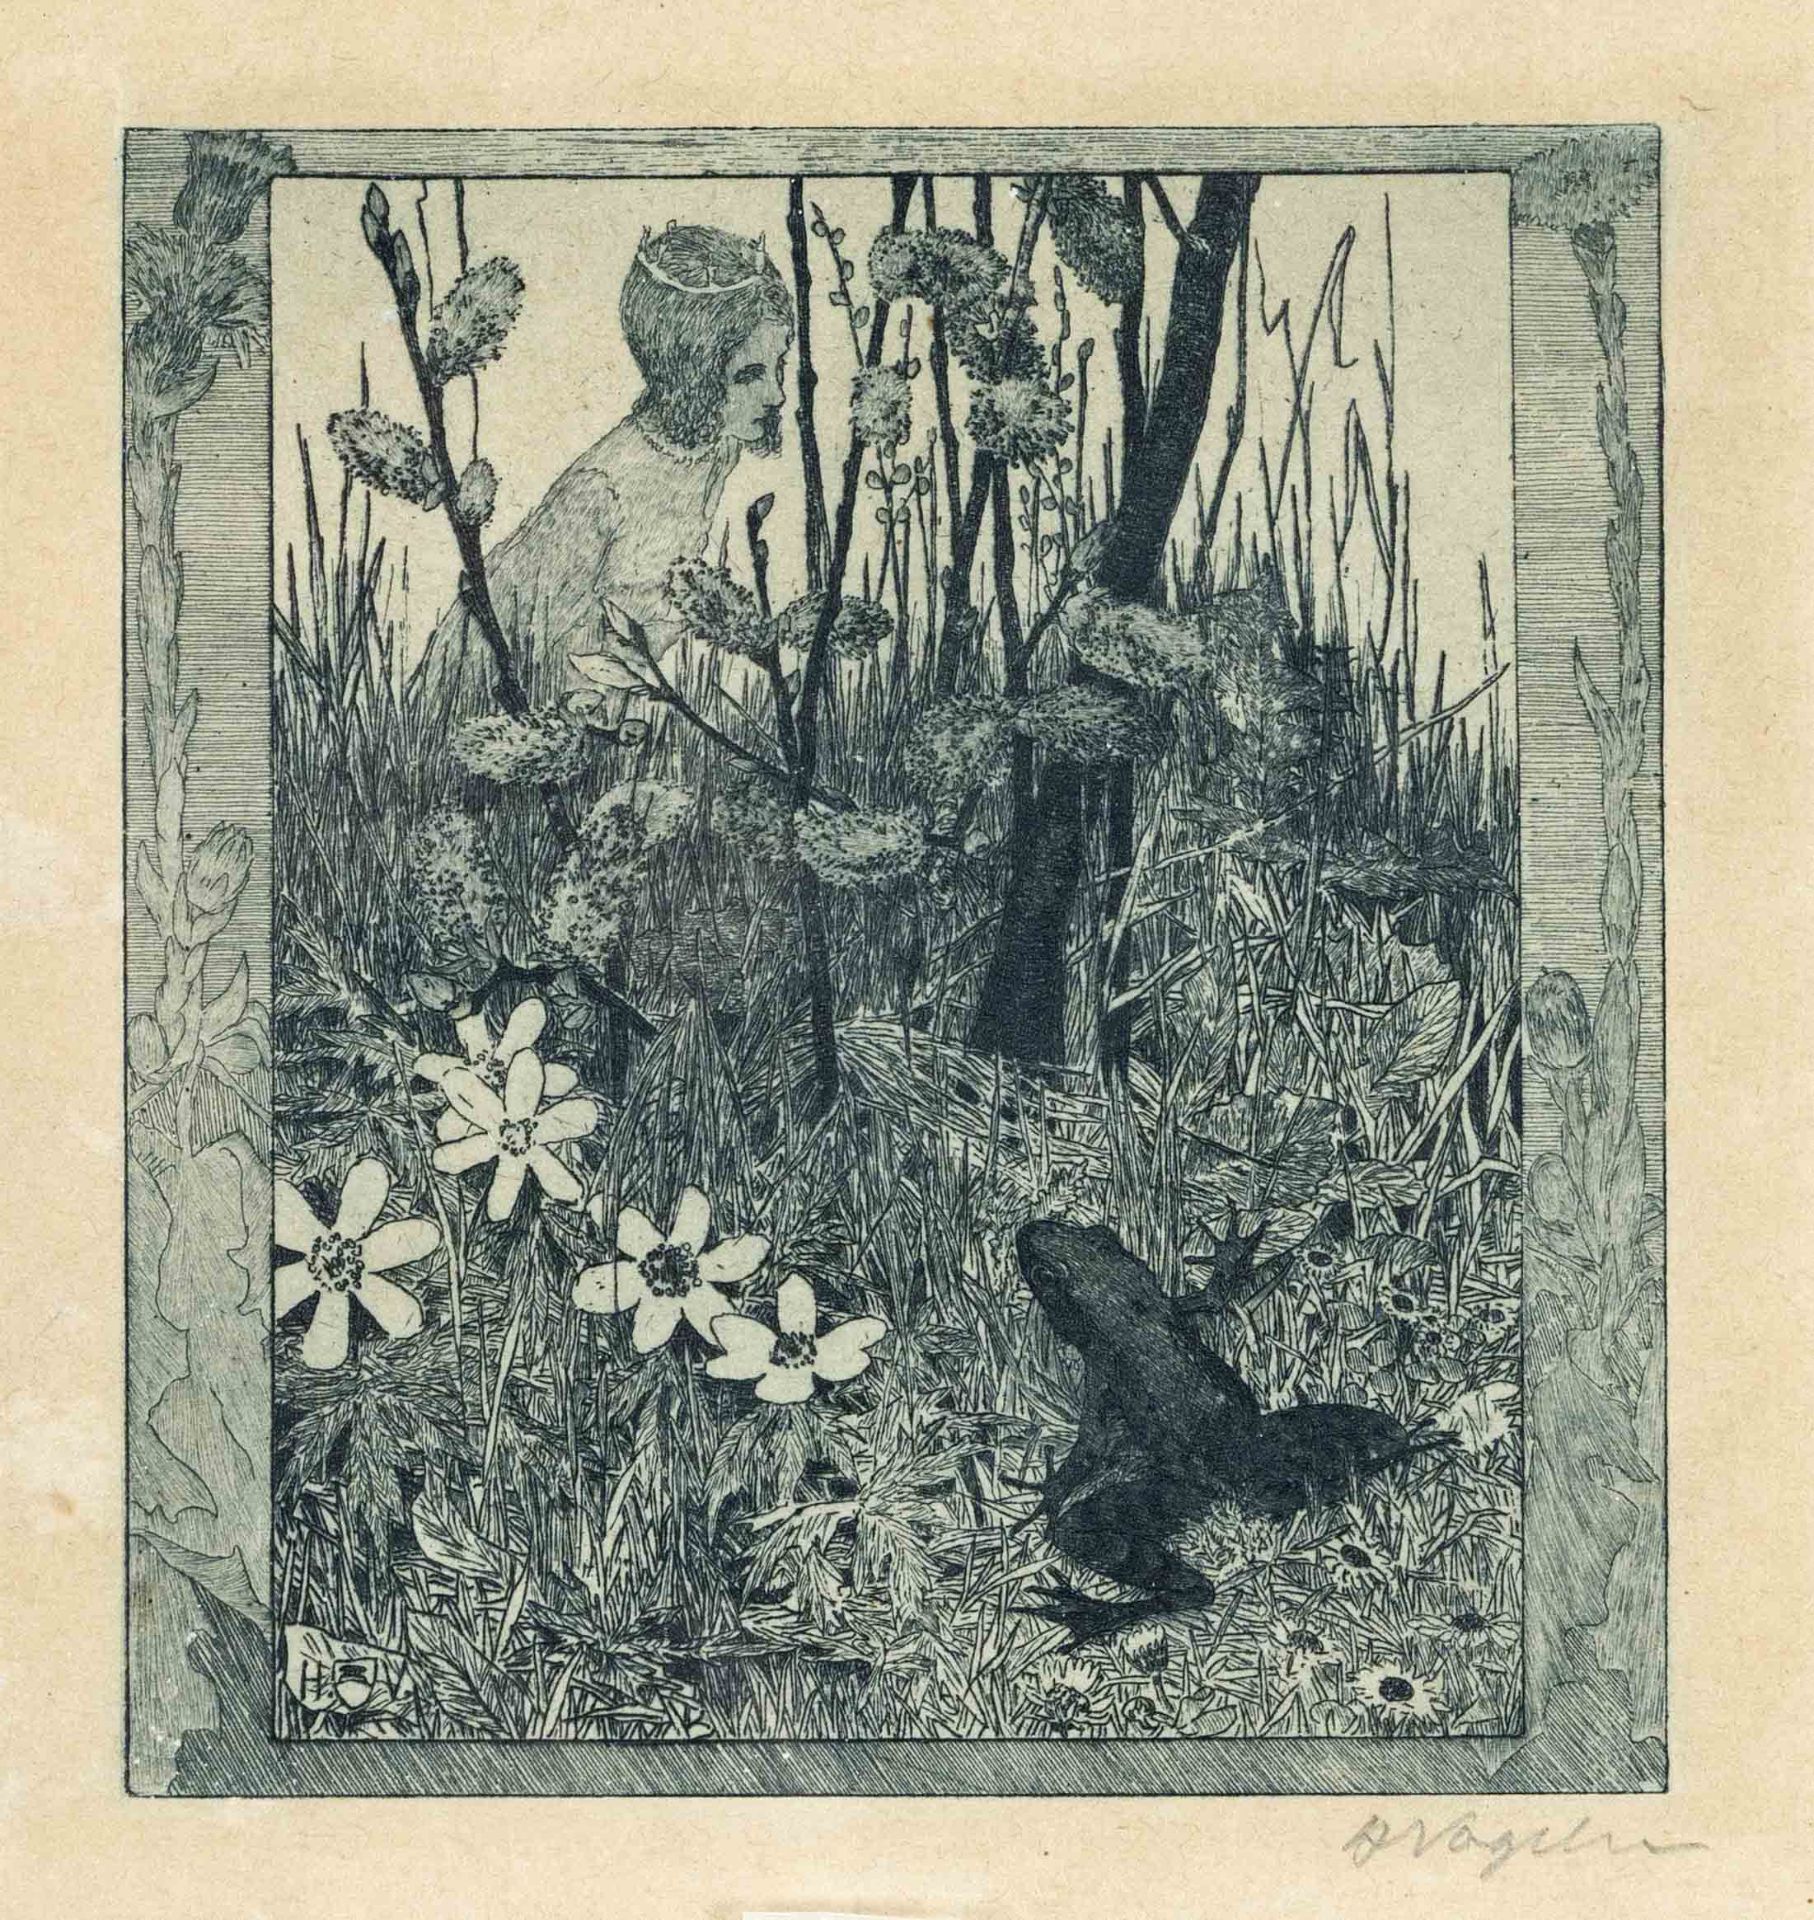 Heinrich Vogeler (1872-1942), Die Froschbraut, 1899, etching in green, signed HVogeler with